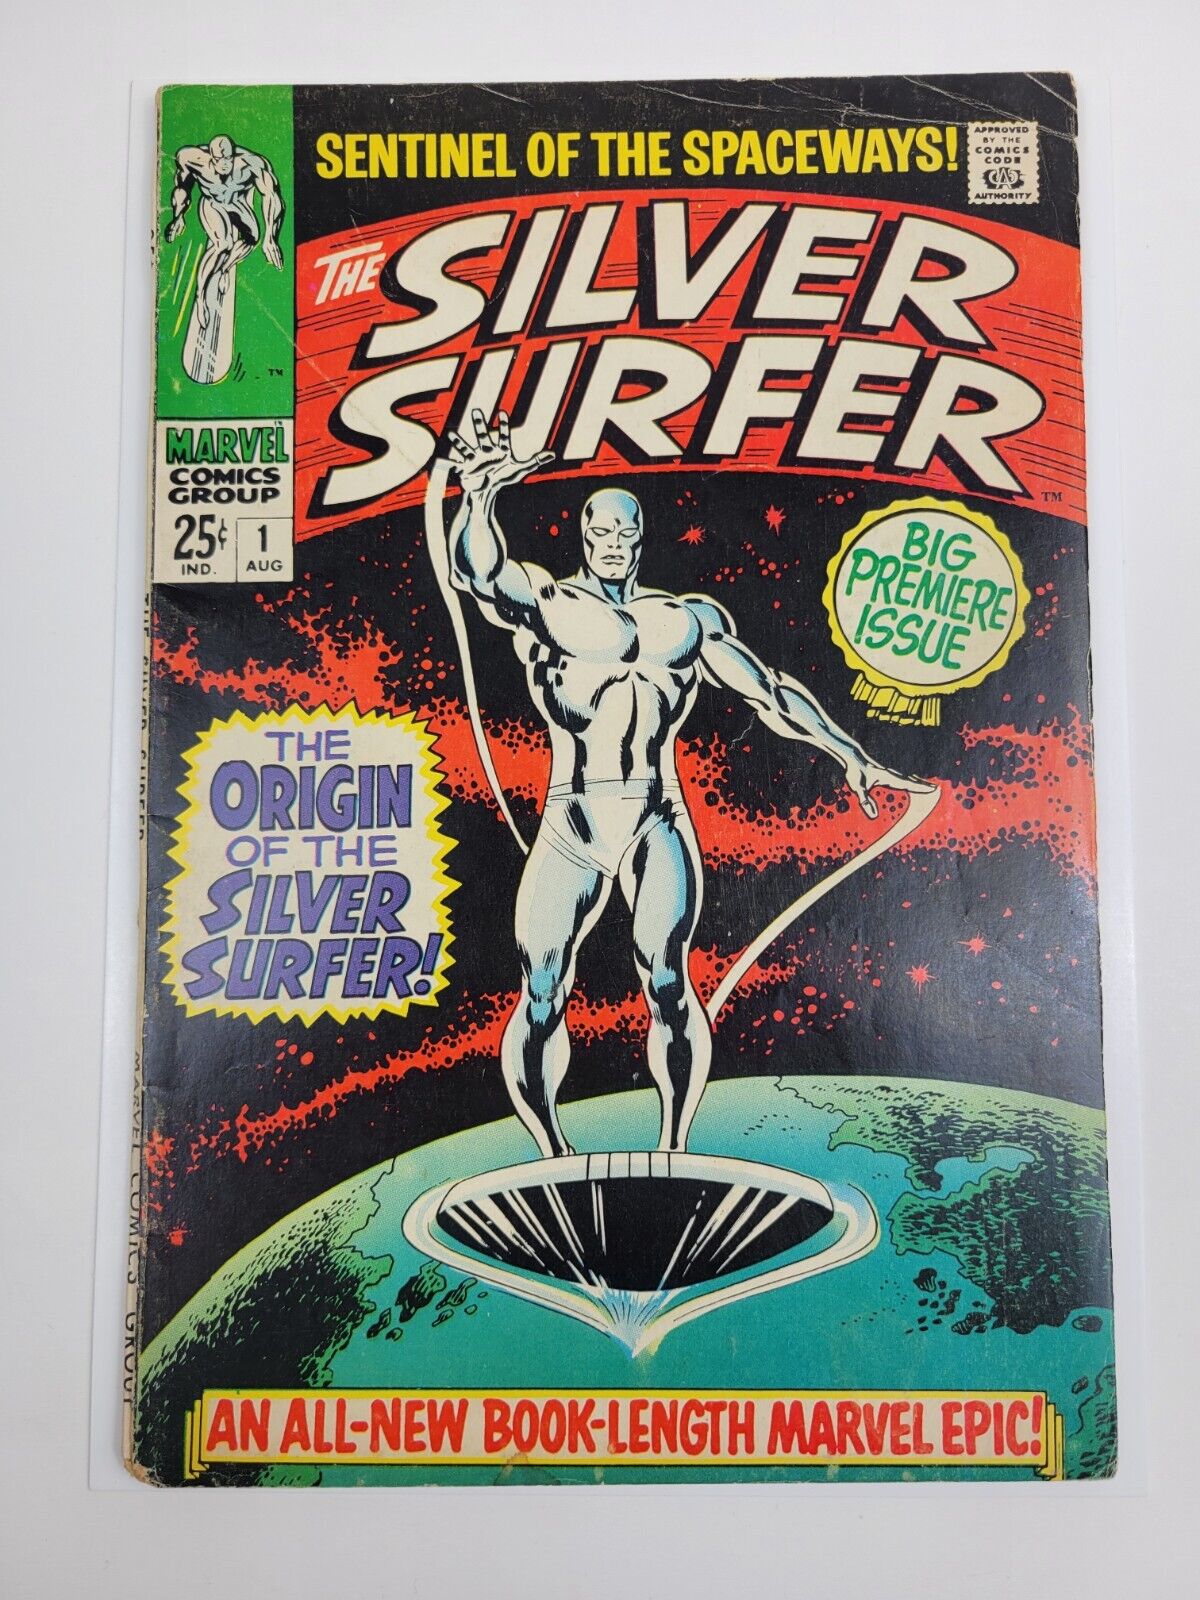 The Silver Surfer #1 Marvel Comics 1968 - Origin of Silver Surfer & Watcher